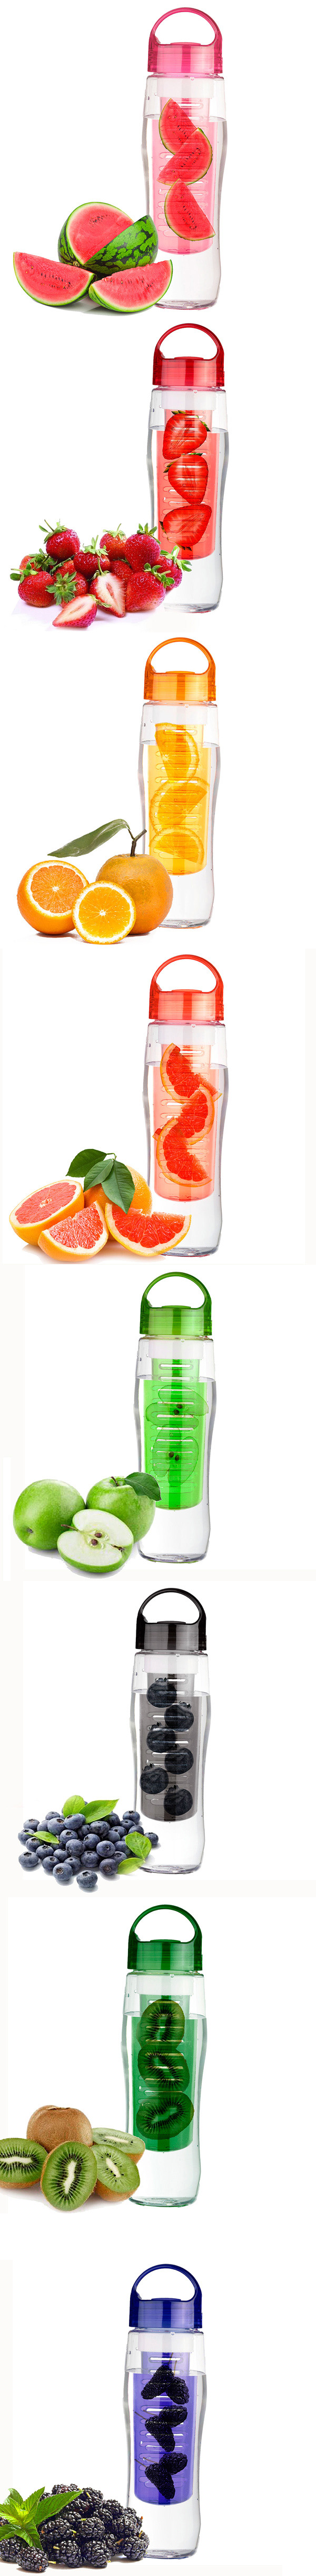 700ML-Sports-Plastic-Fruit-Infuser-Water-Bottle-Cup-BPA-Free-Filter-Juice-Maker-1016353-4